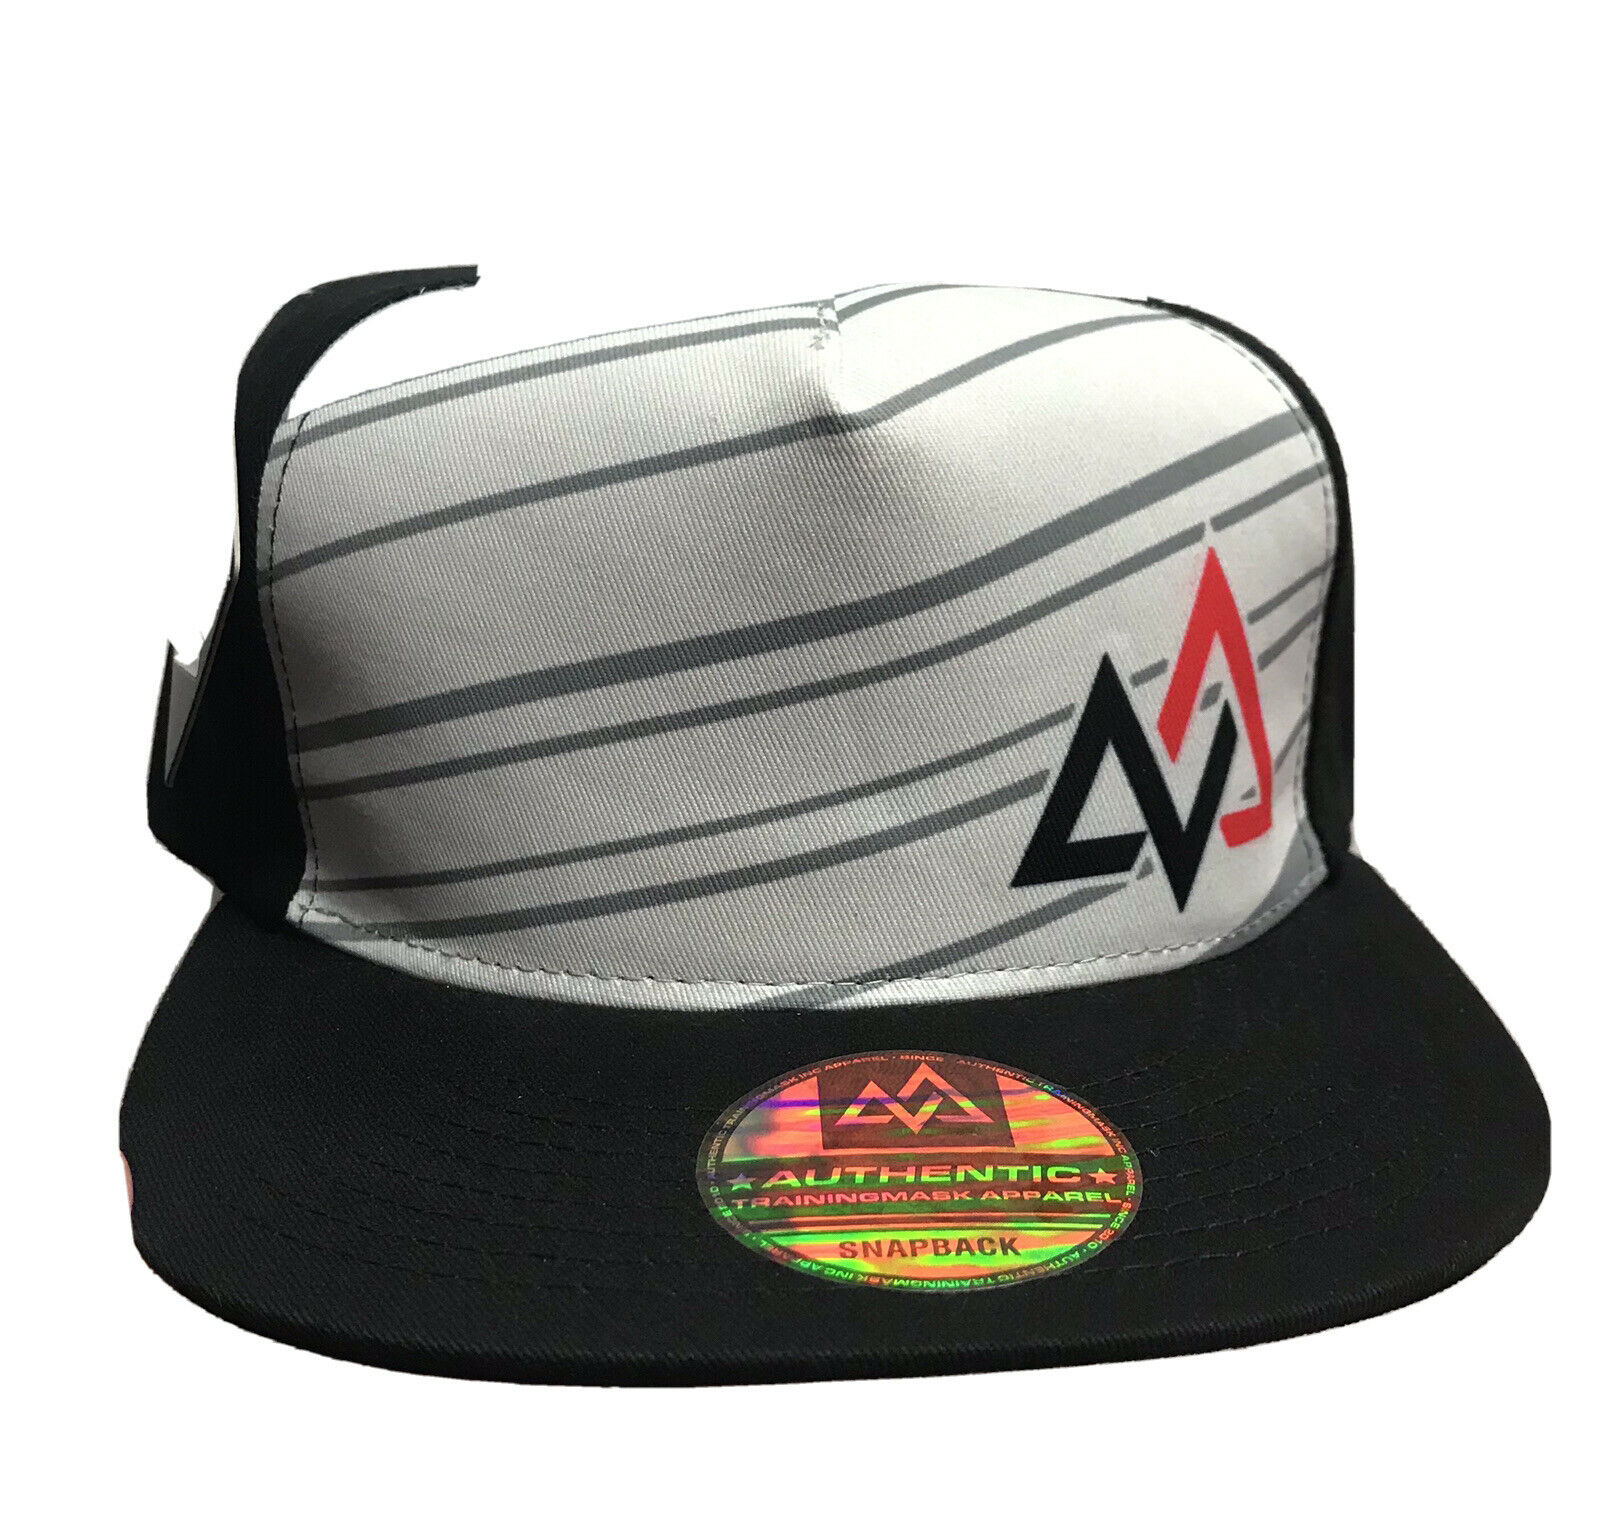 Training Mask Apparel Black Snapback Mma Trucker Hat Adjustable L/xl